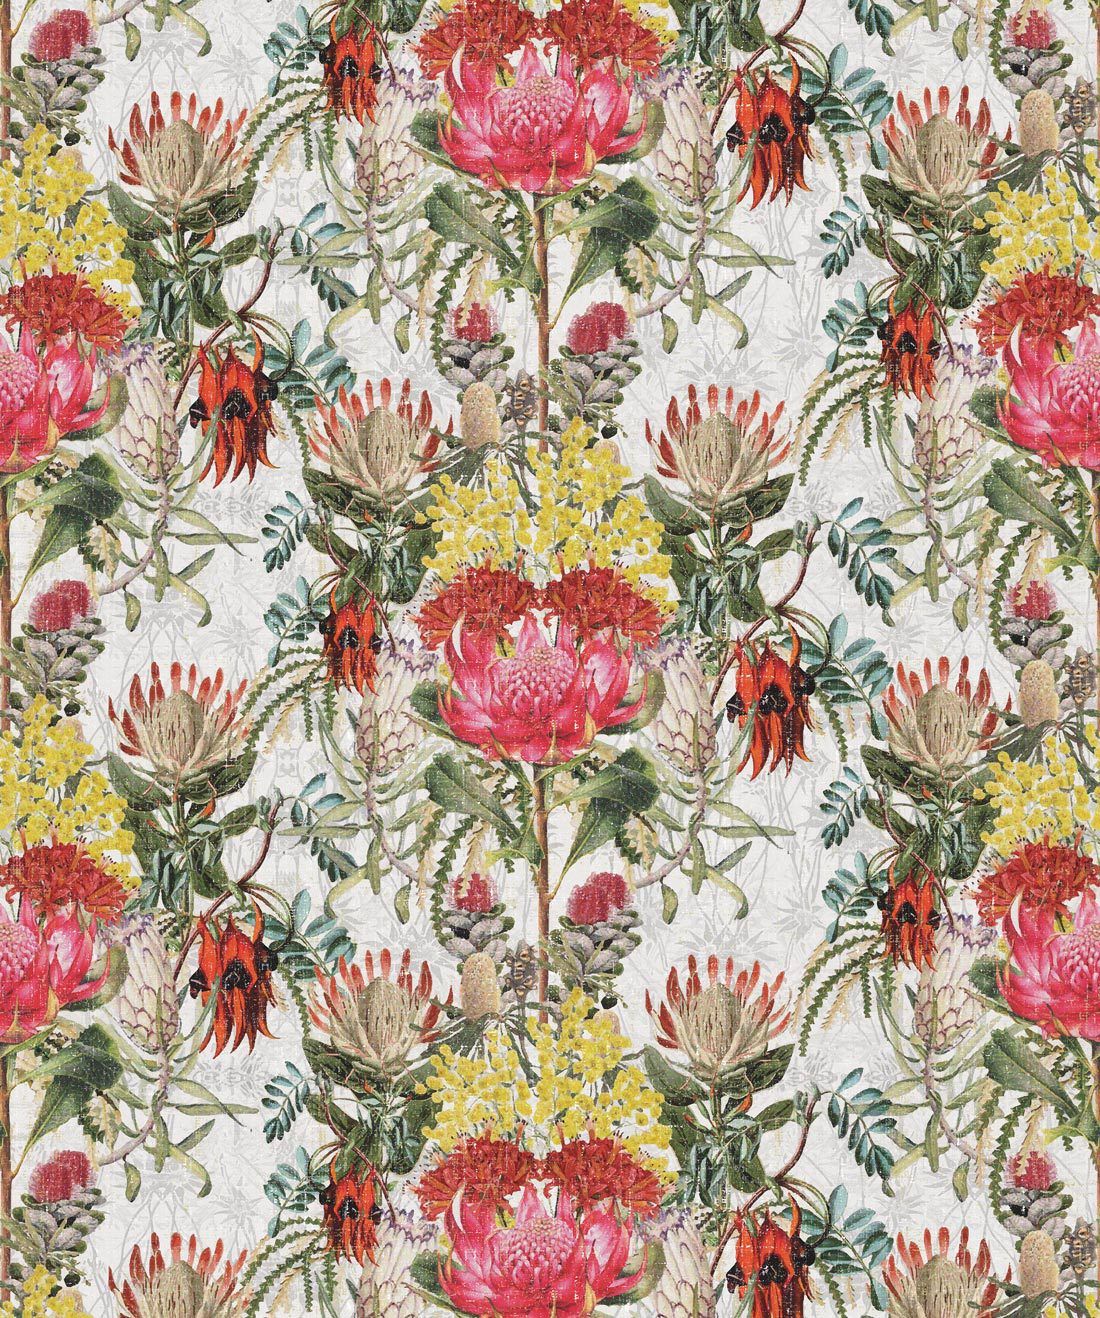 Simcox Wildflowers Original Wallpaper